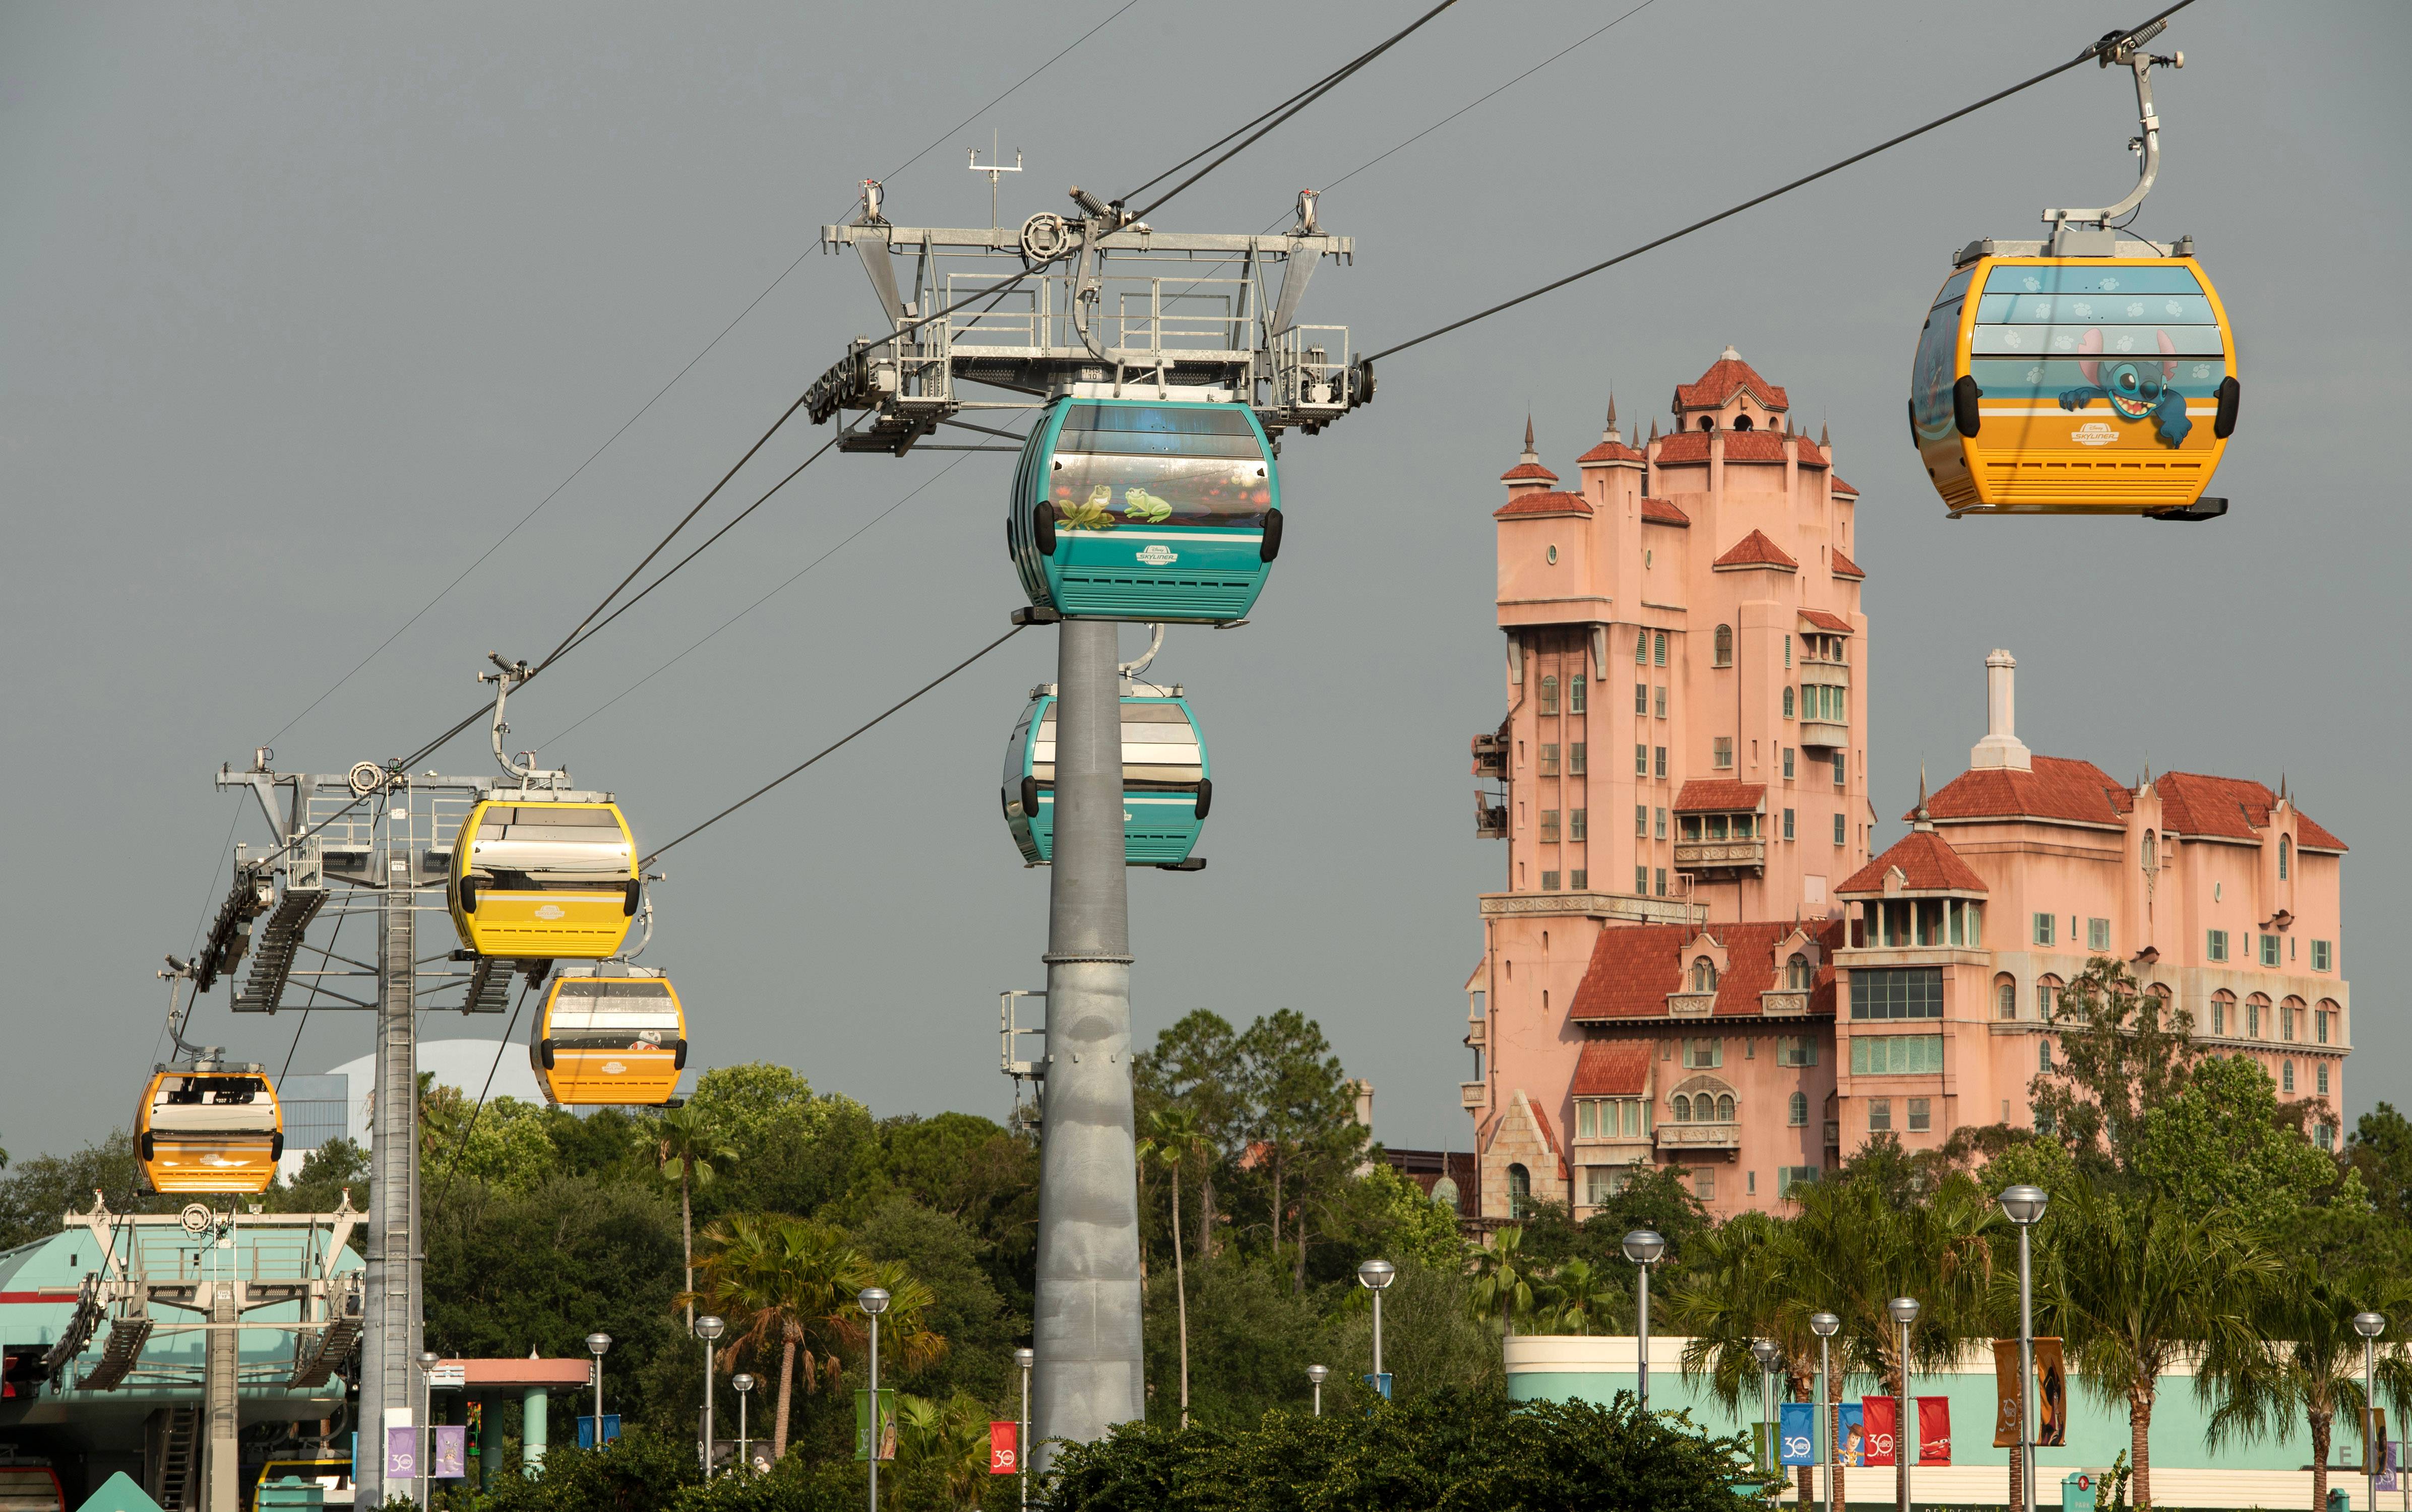 Disney Skyliner Gondolas unwrapped 